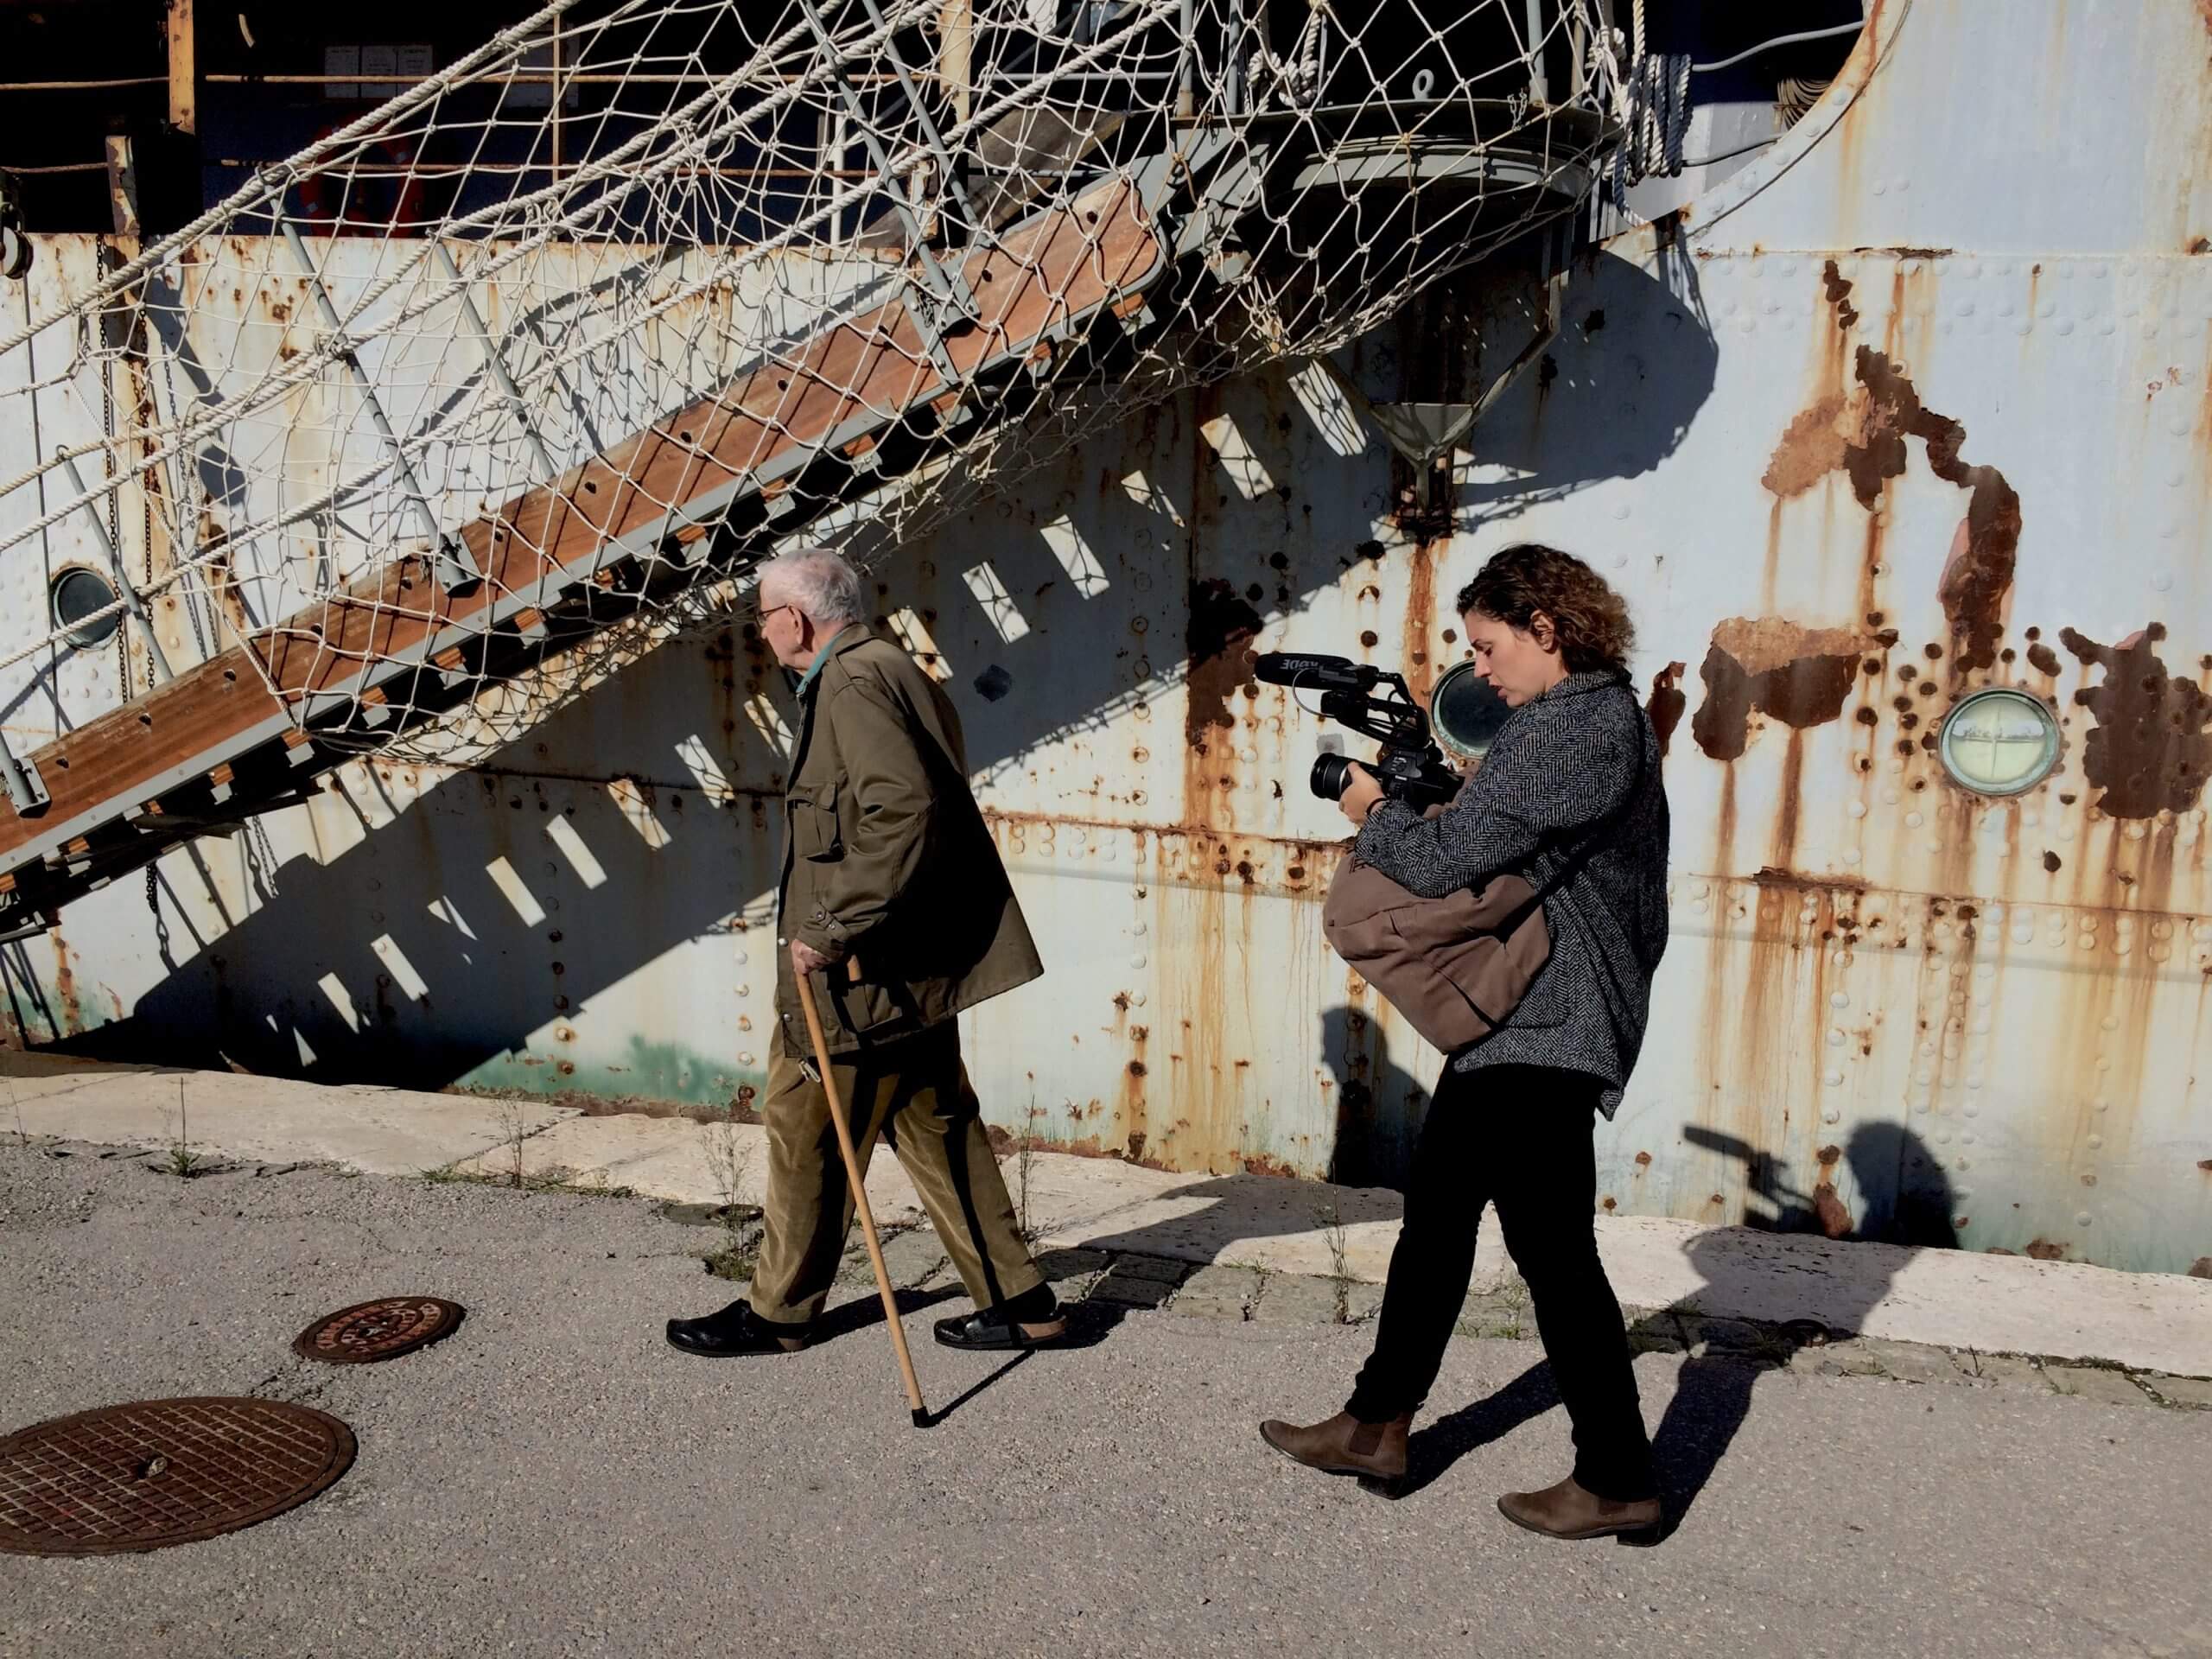 Mila Turajlić and Stevan Labudović visiting the decaying ship of Yugoslav President Tito during filming.